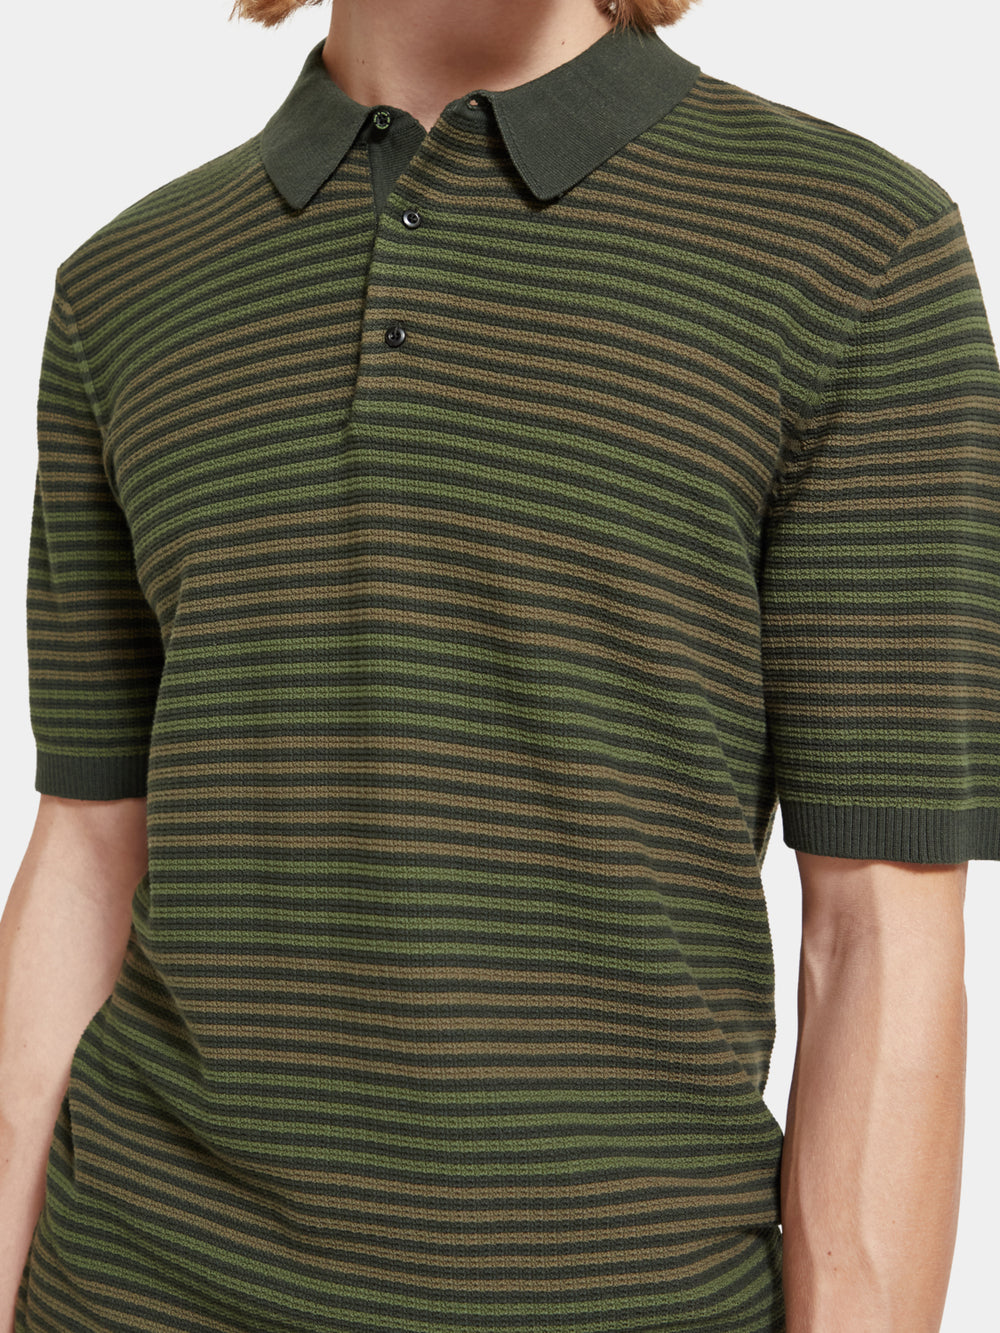 Knitted striped polo shirt - Scotch & Soda NZ